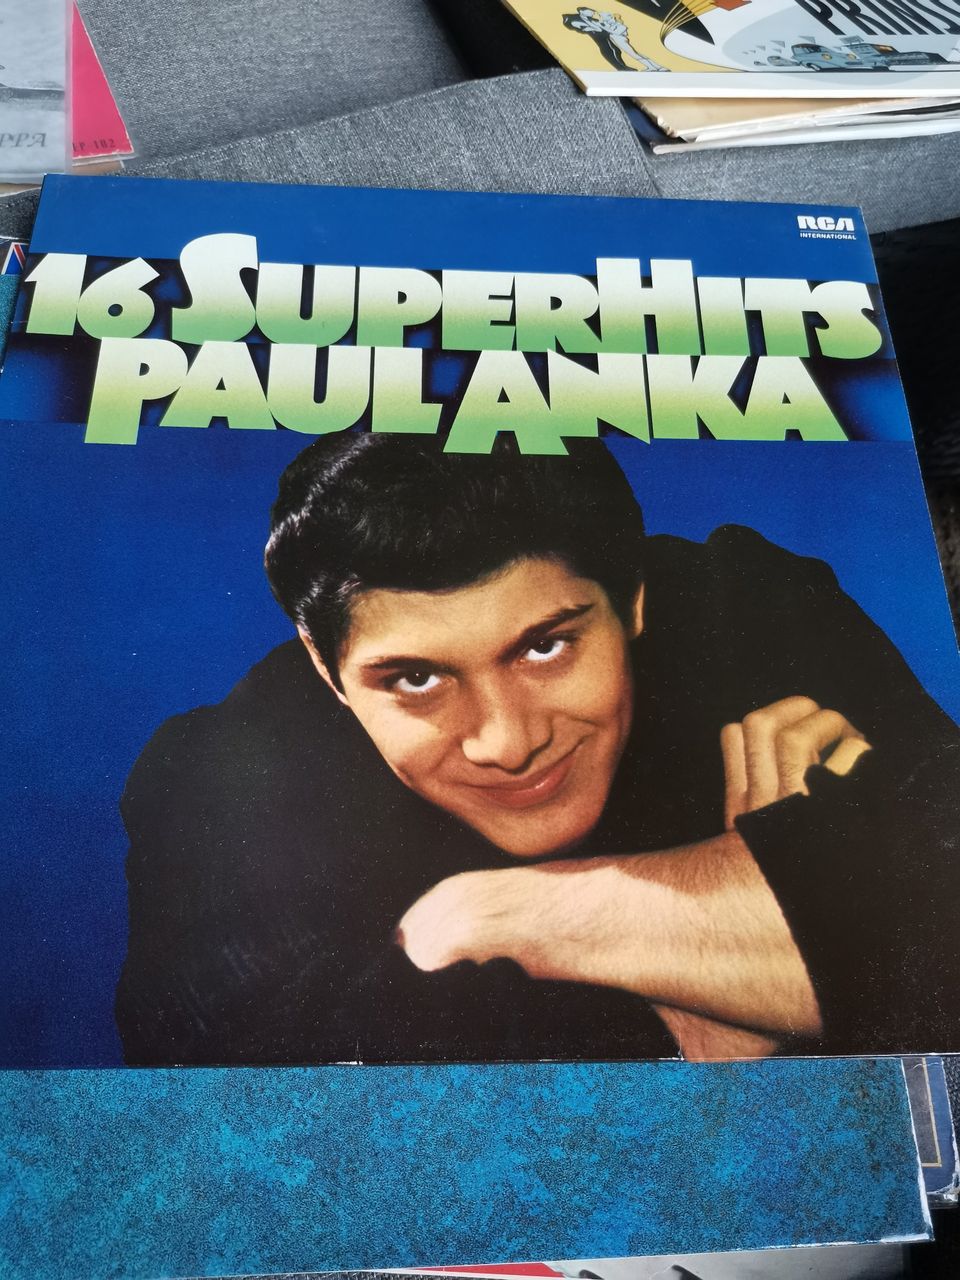 Paul Anka 16 super hits LP